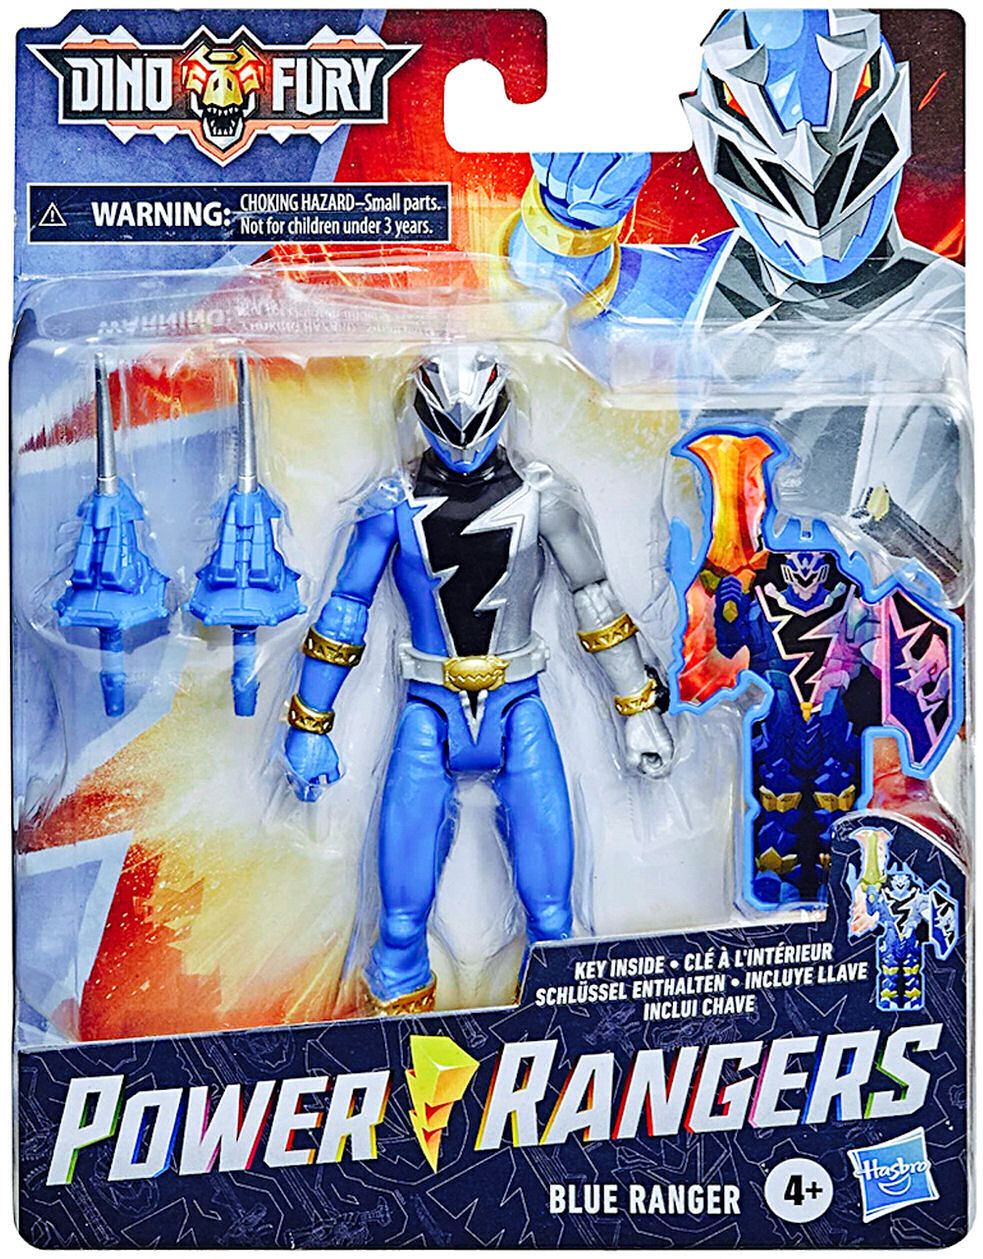 Mighty Morphin Legendary Ranger Clé Pack Bandai SABAN'S Power Rangers 